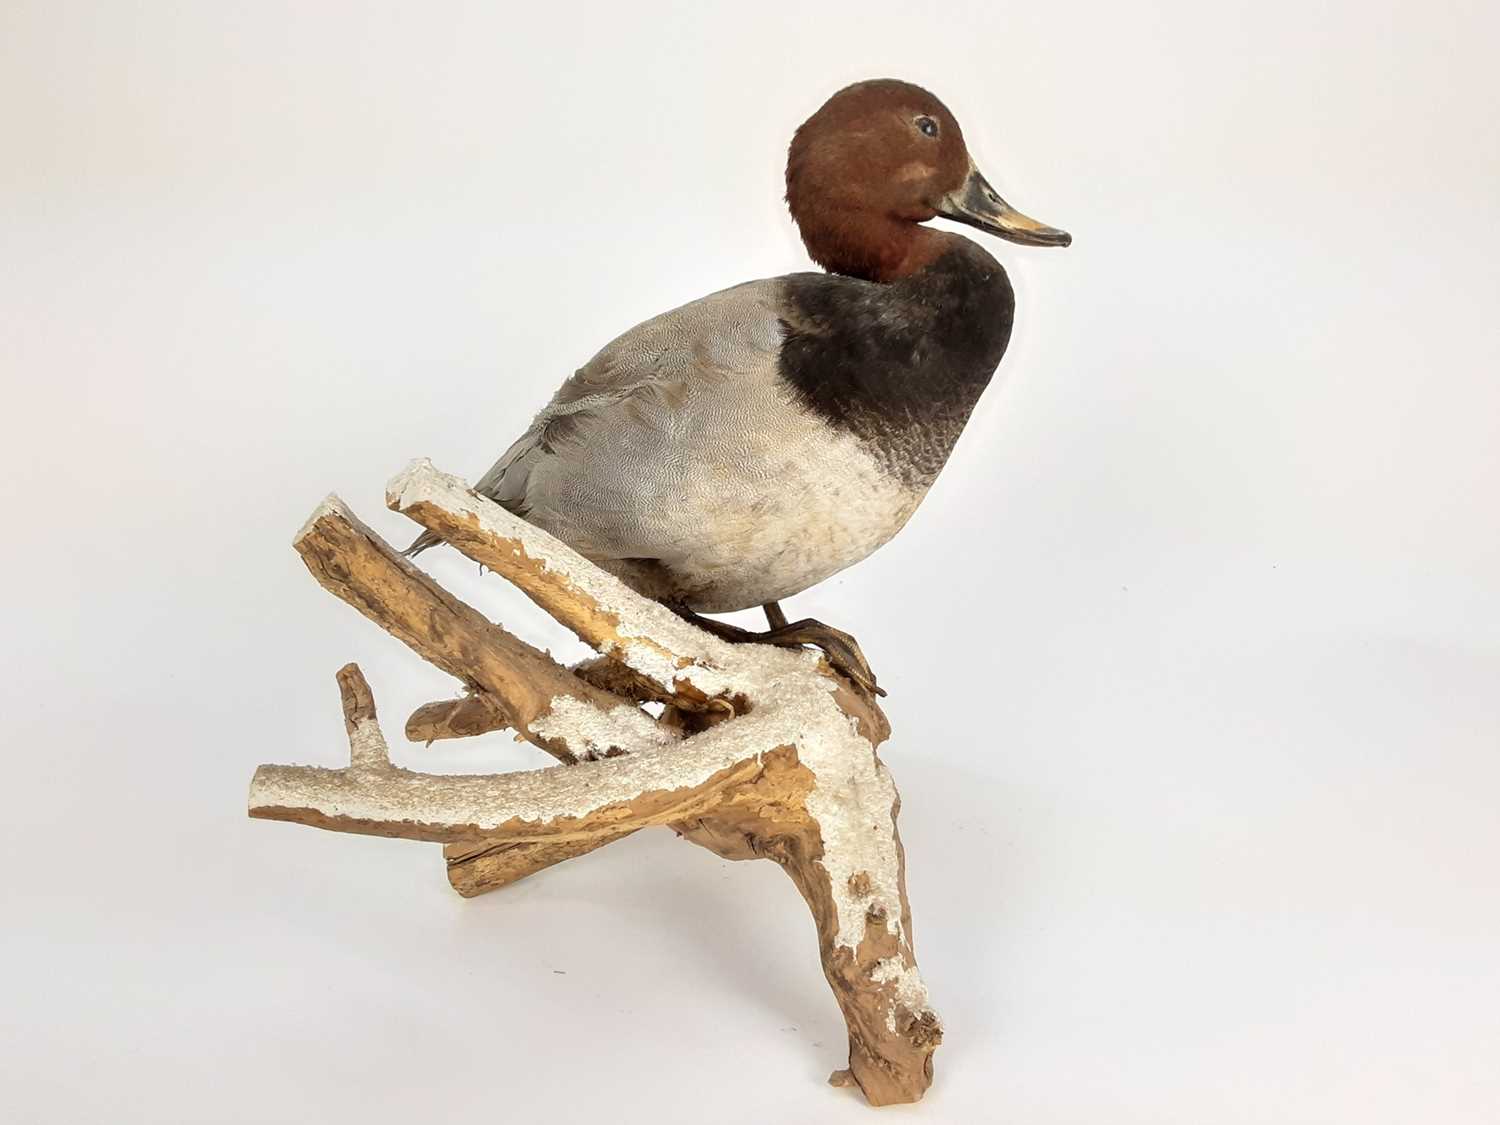 Common Pochard mounted on naturalistic wooden base - Image 3 of 4